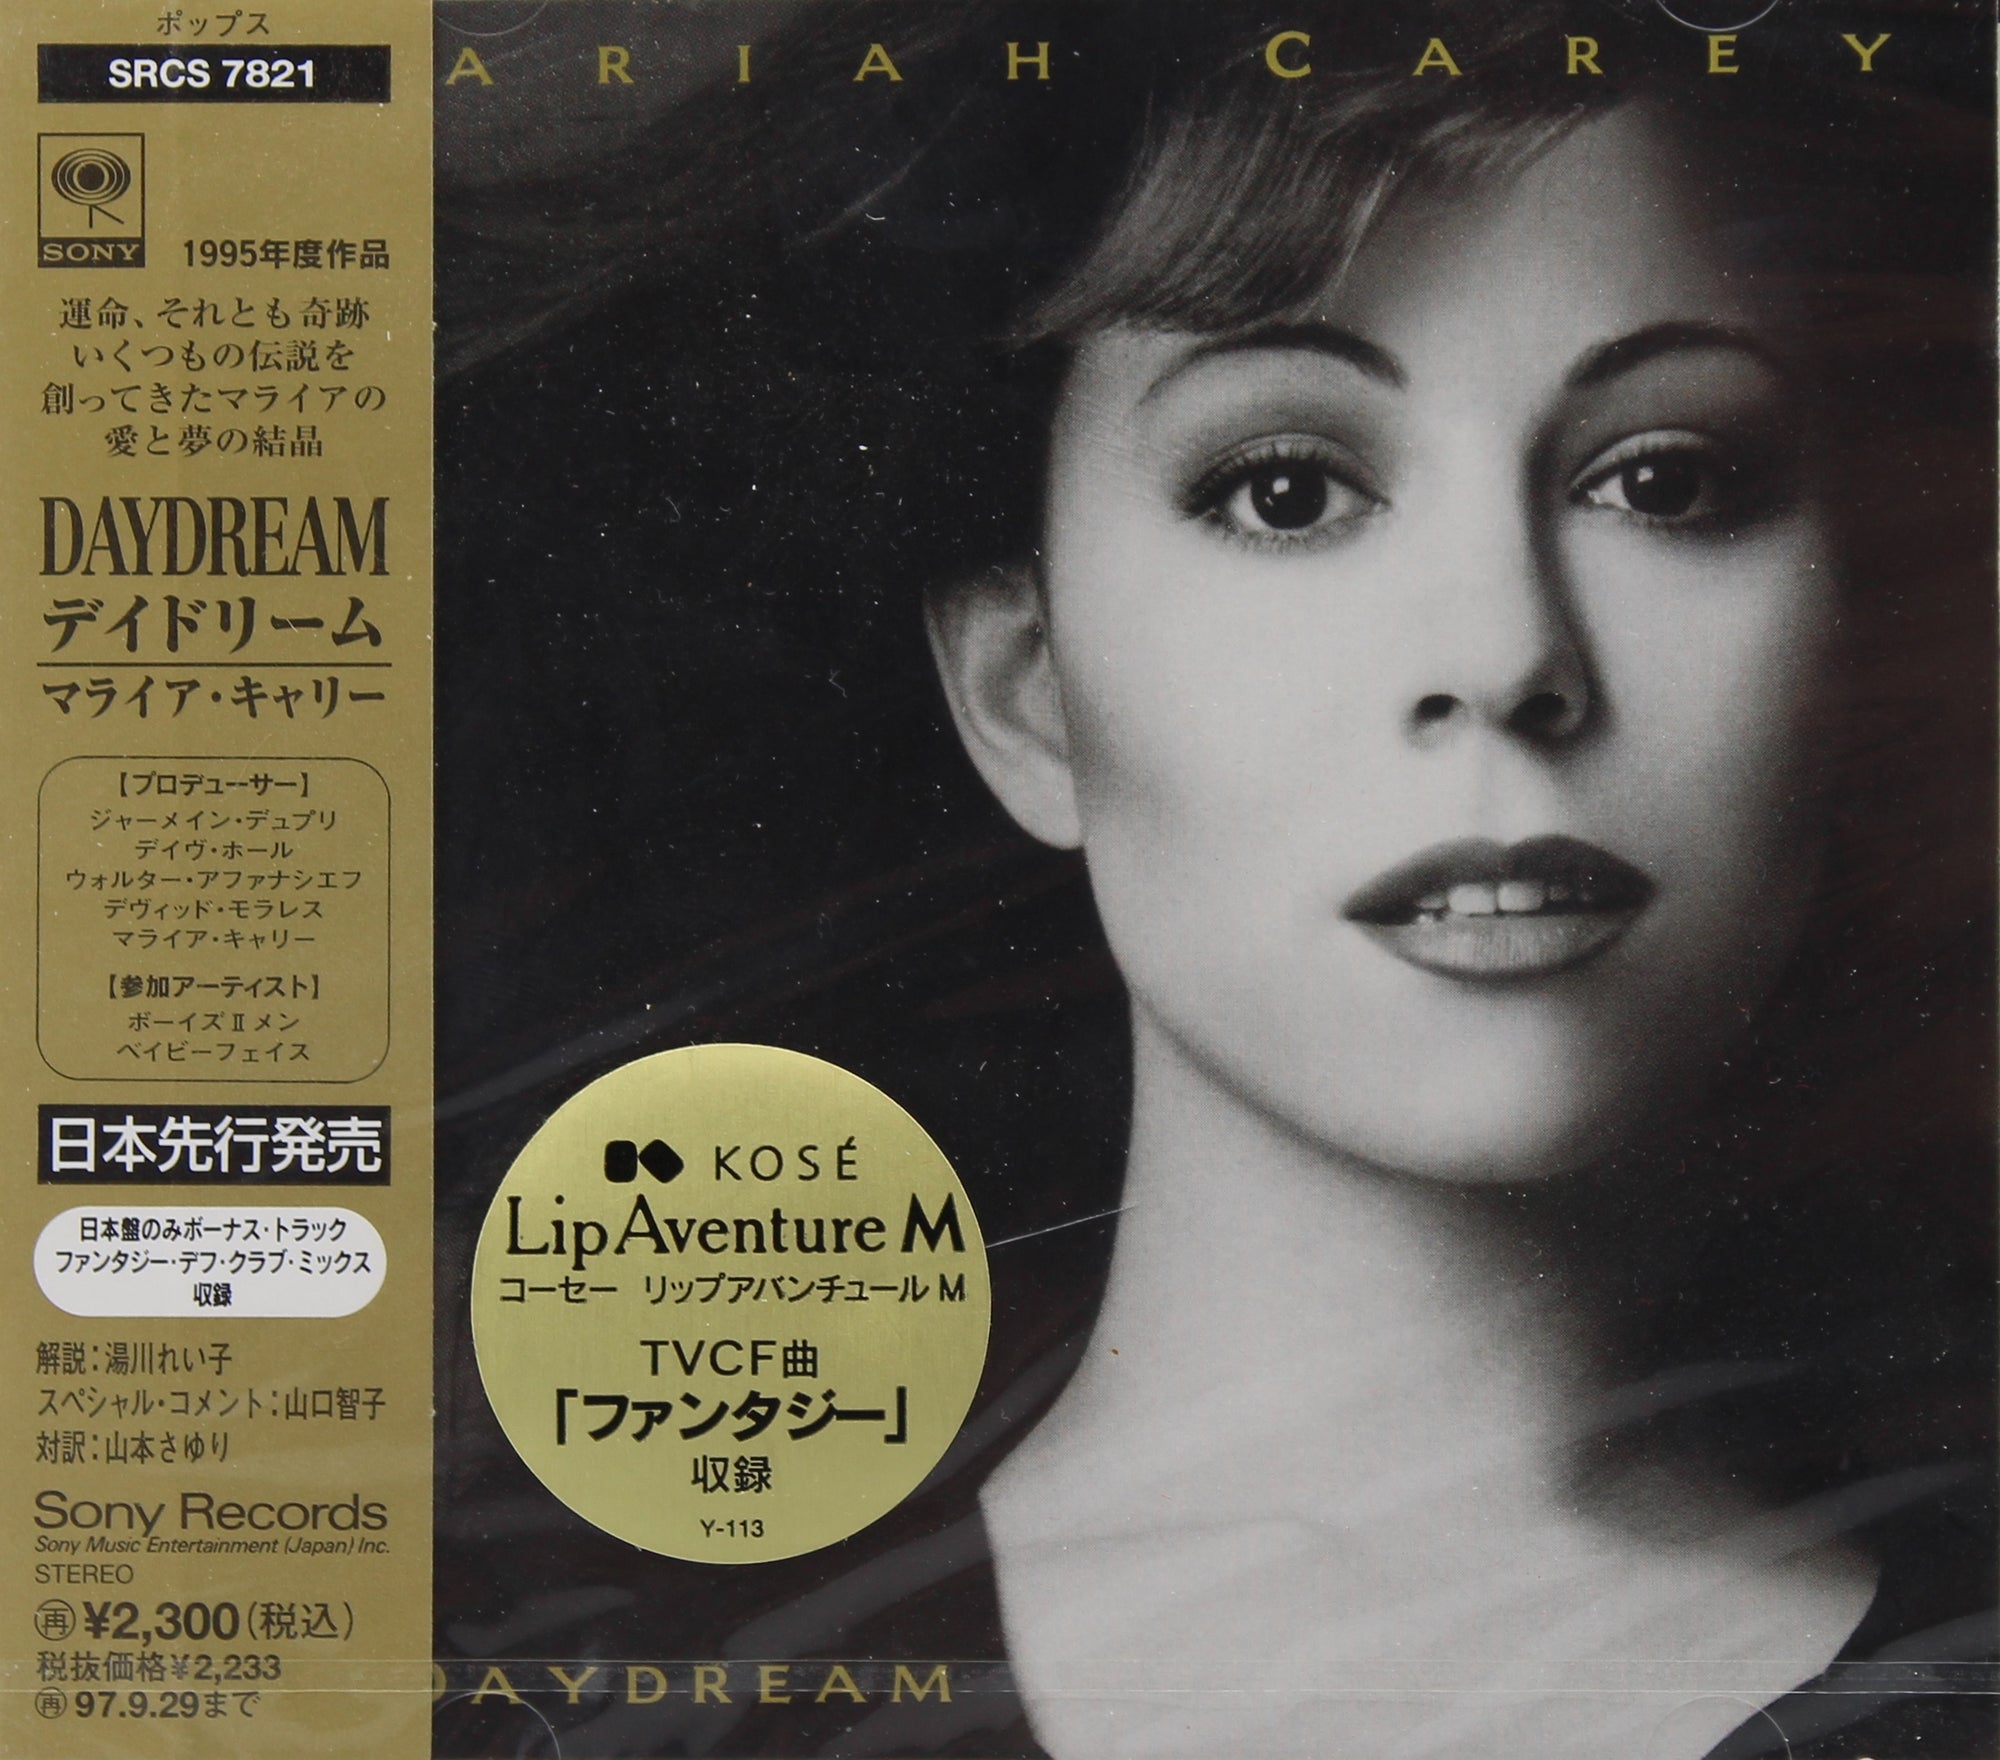 Mariah Carey = マライア・キャリー* – Butterfly = バタフラ, CD 